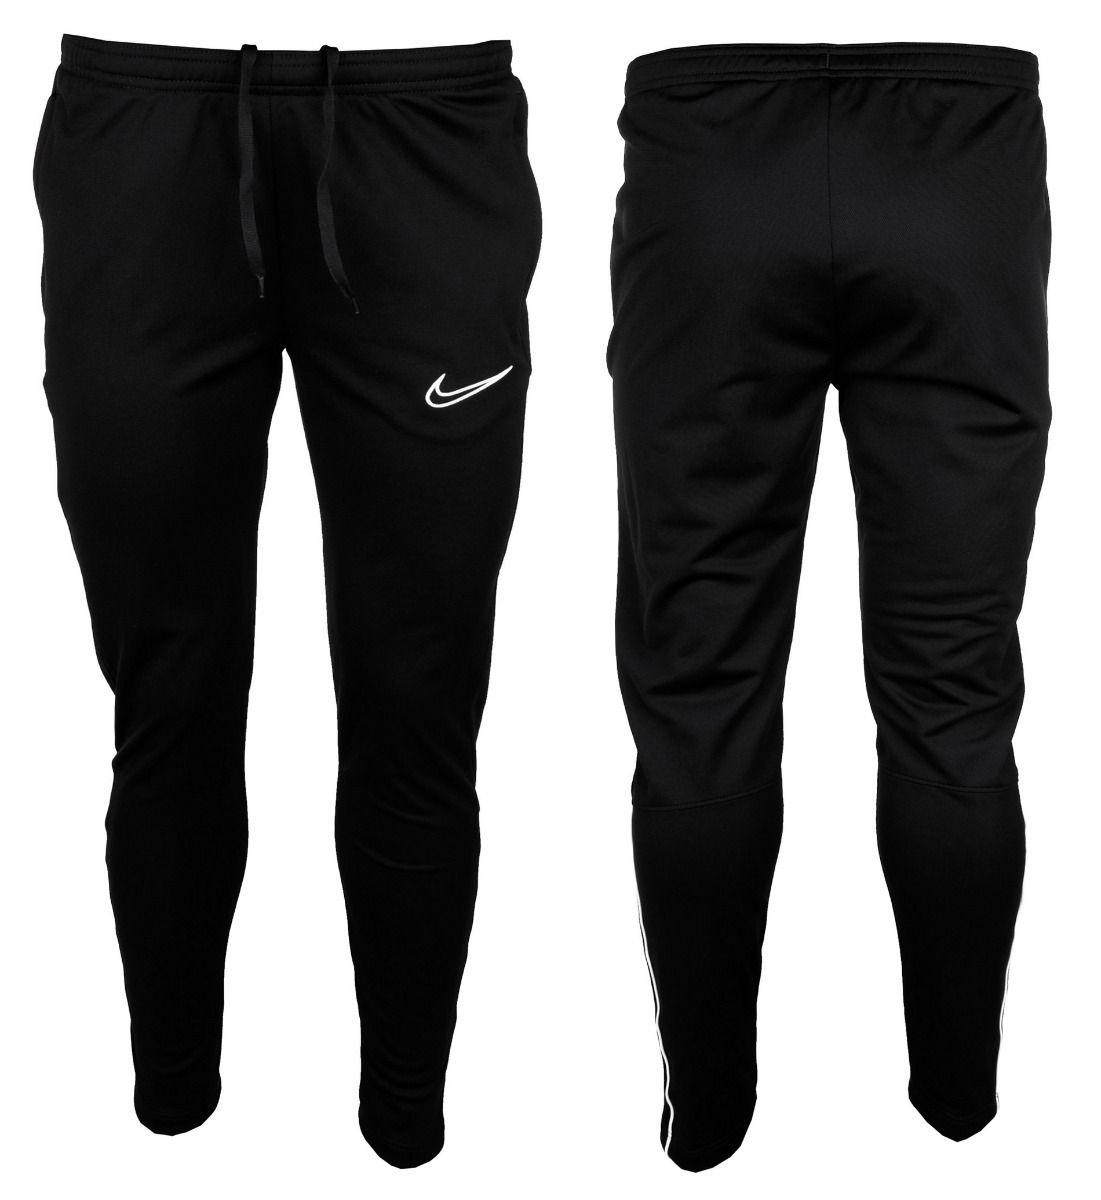 Nike Damen Trainingsanzug Dry Acd21 Trk Suit DC2096 010